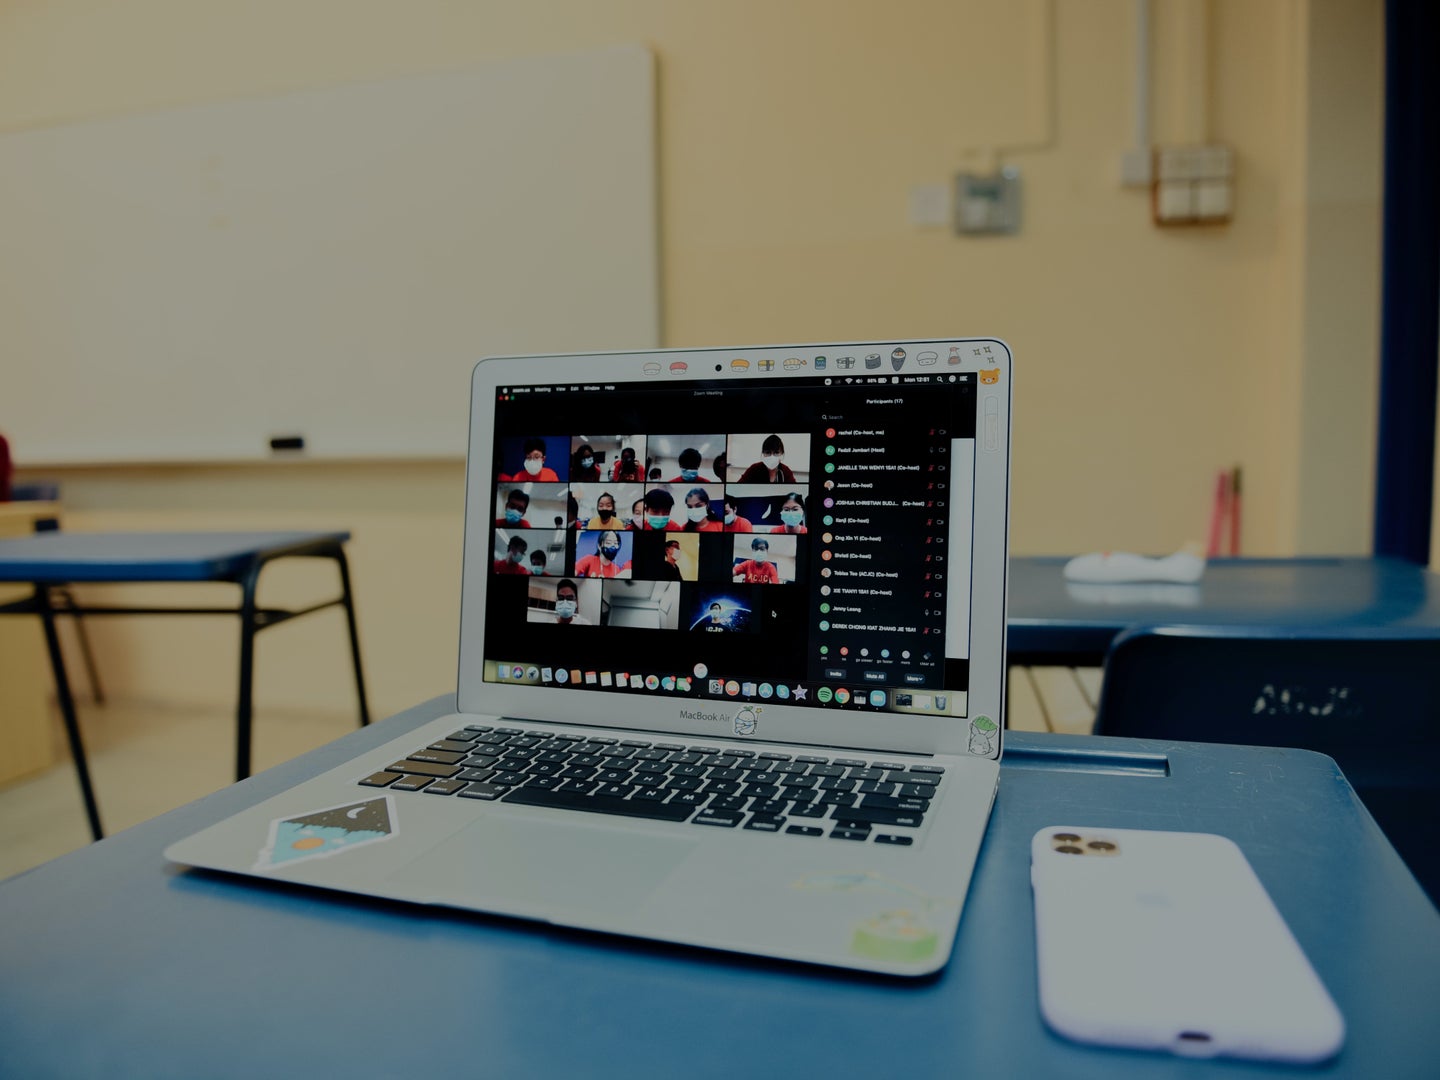 A laptop running Zoom sitting on a blue desk in an empty school classroom.